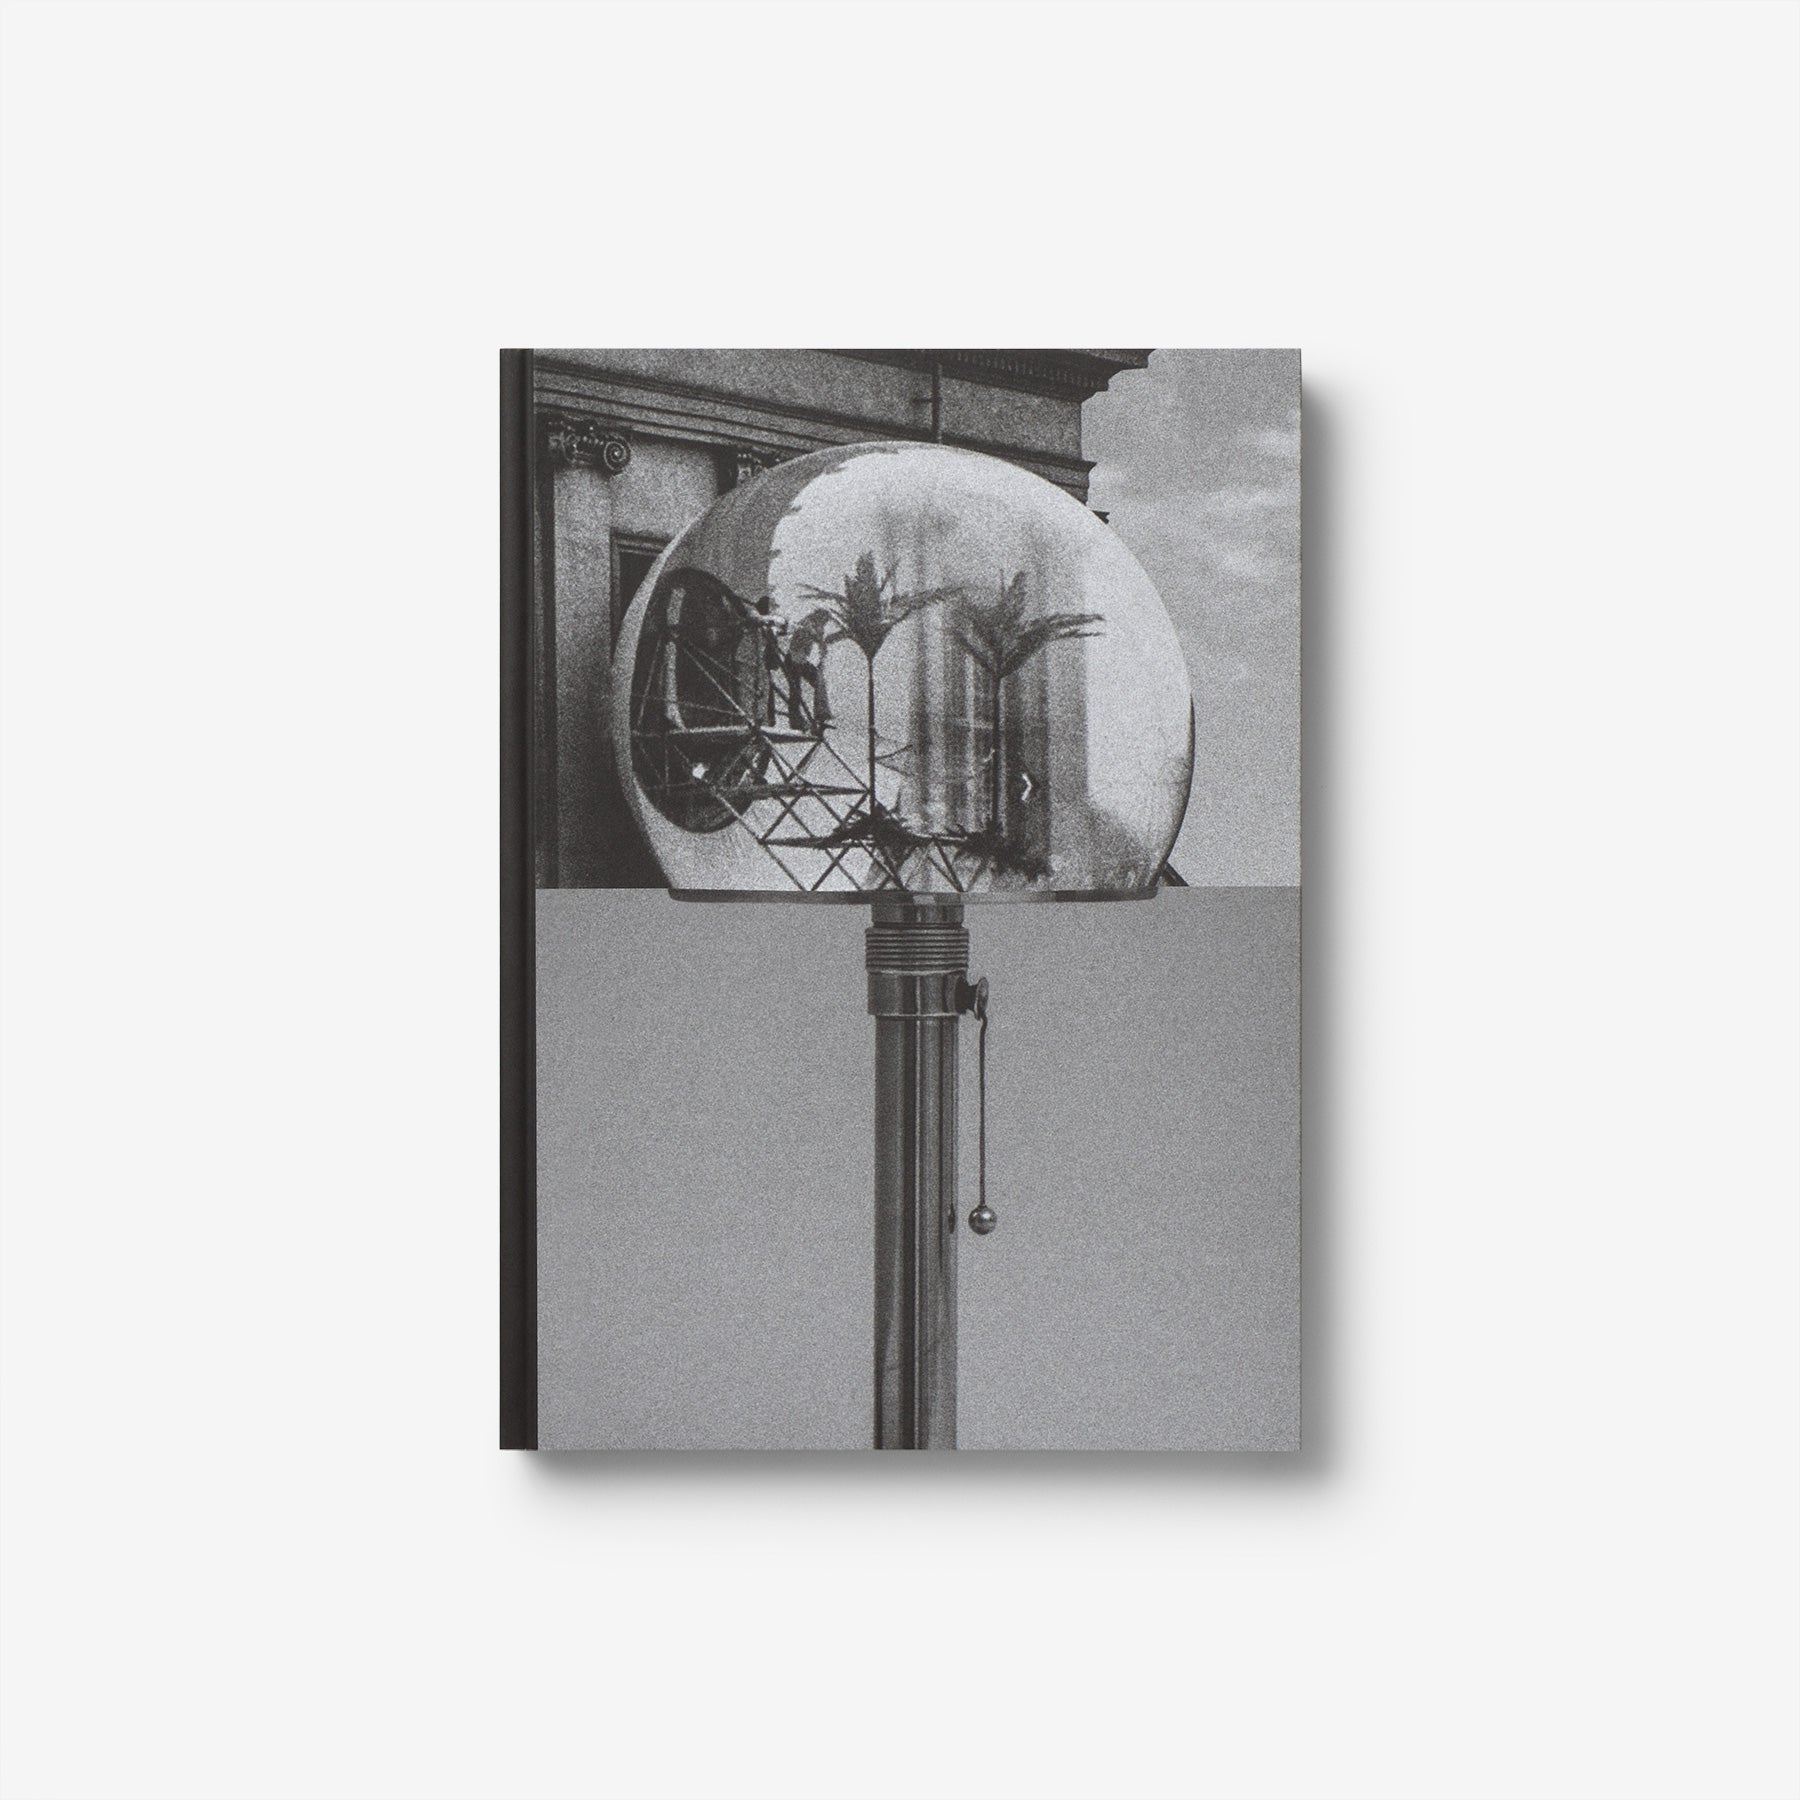 Bauhaus / Documenta: Vision and Brand